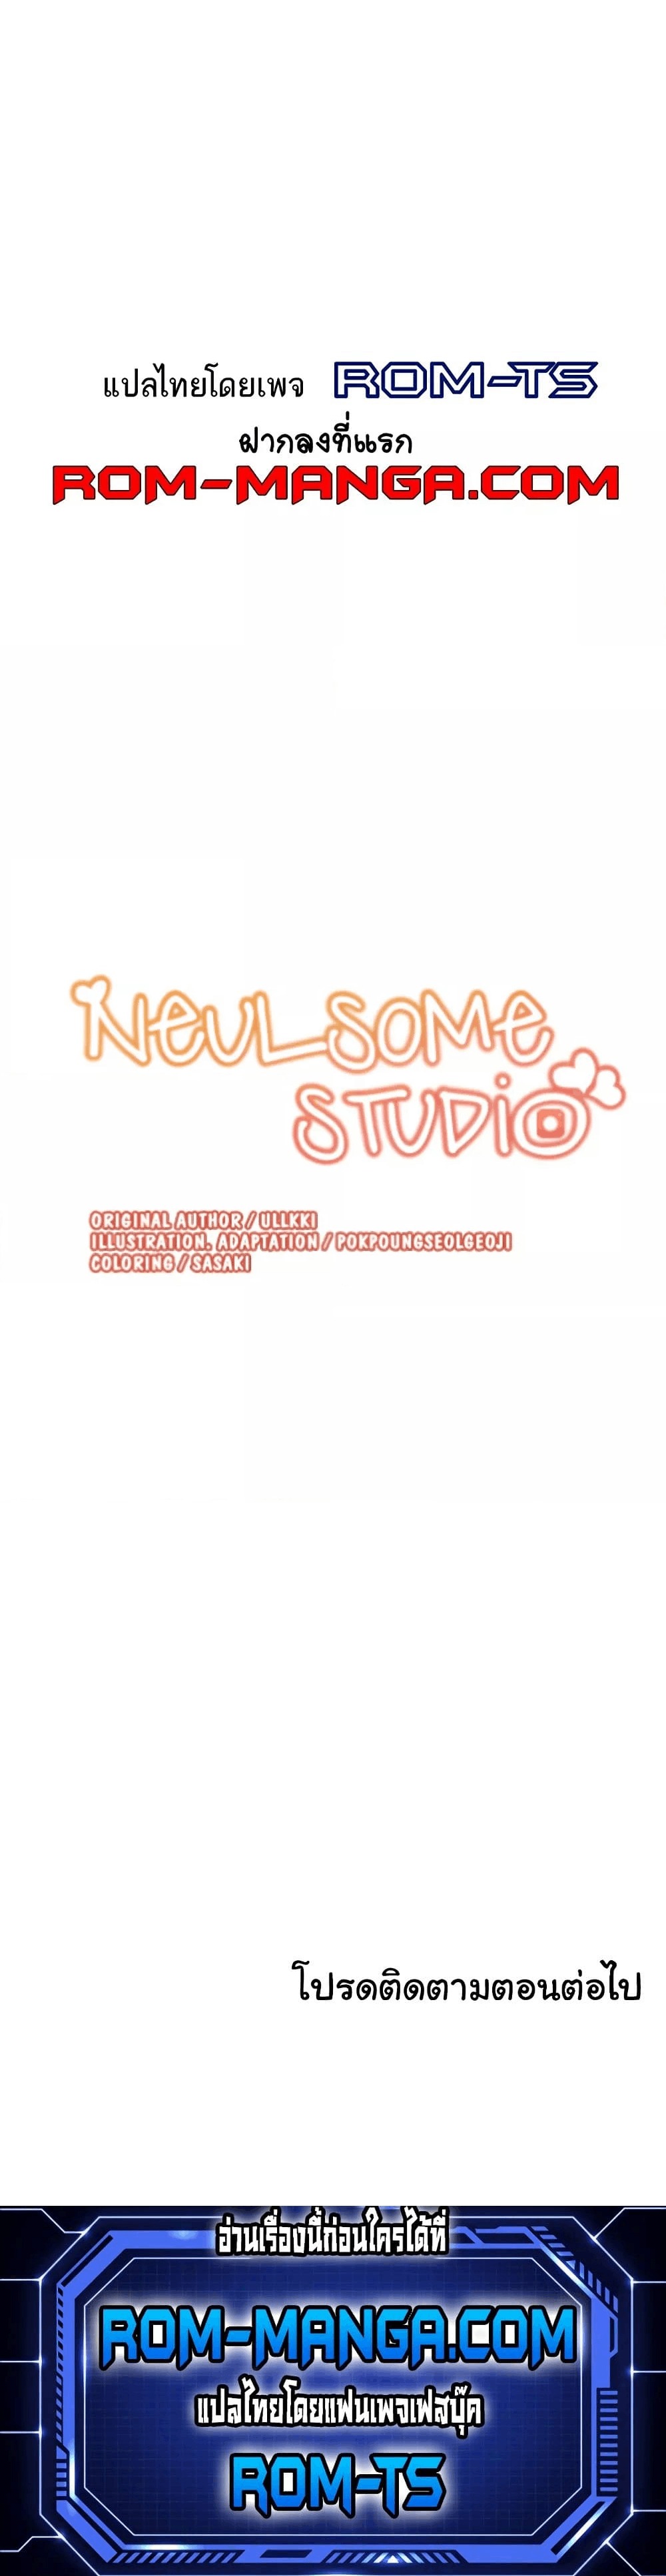 Neulsome Studio 3 (6)